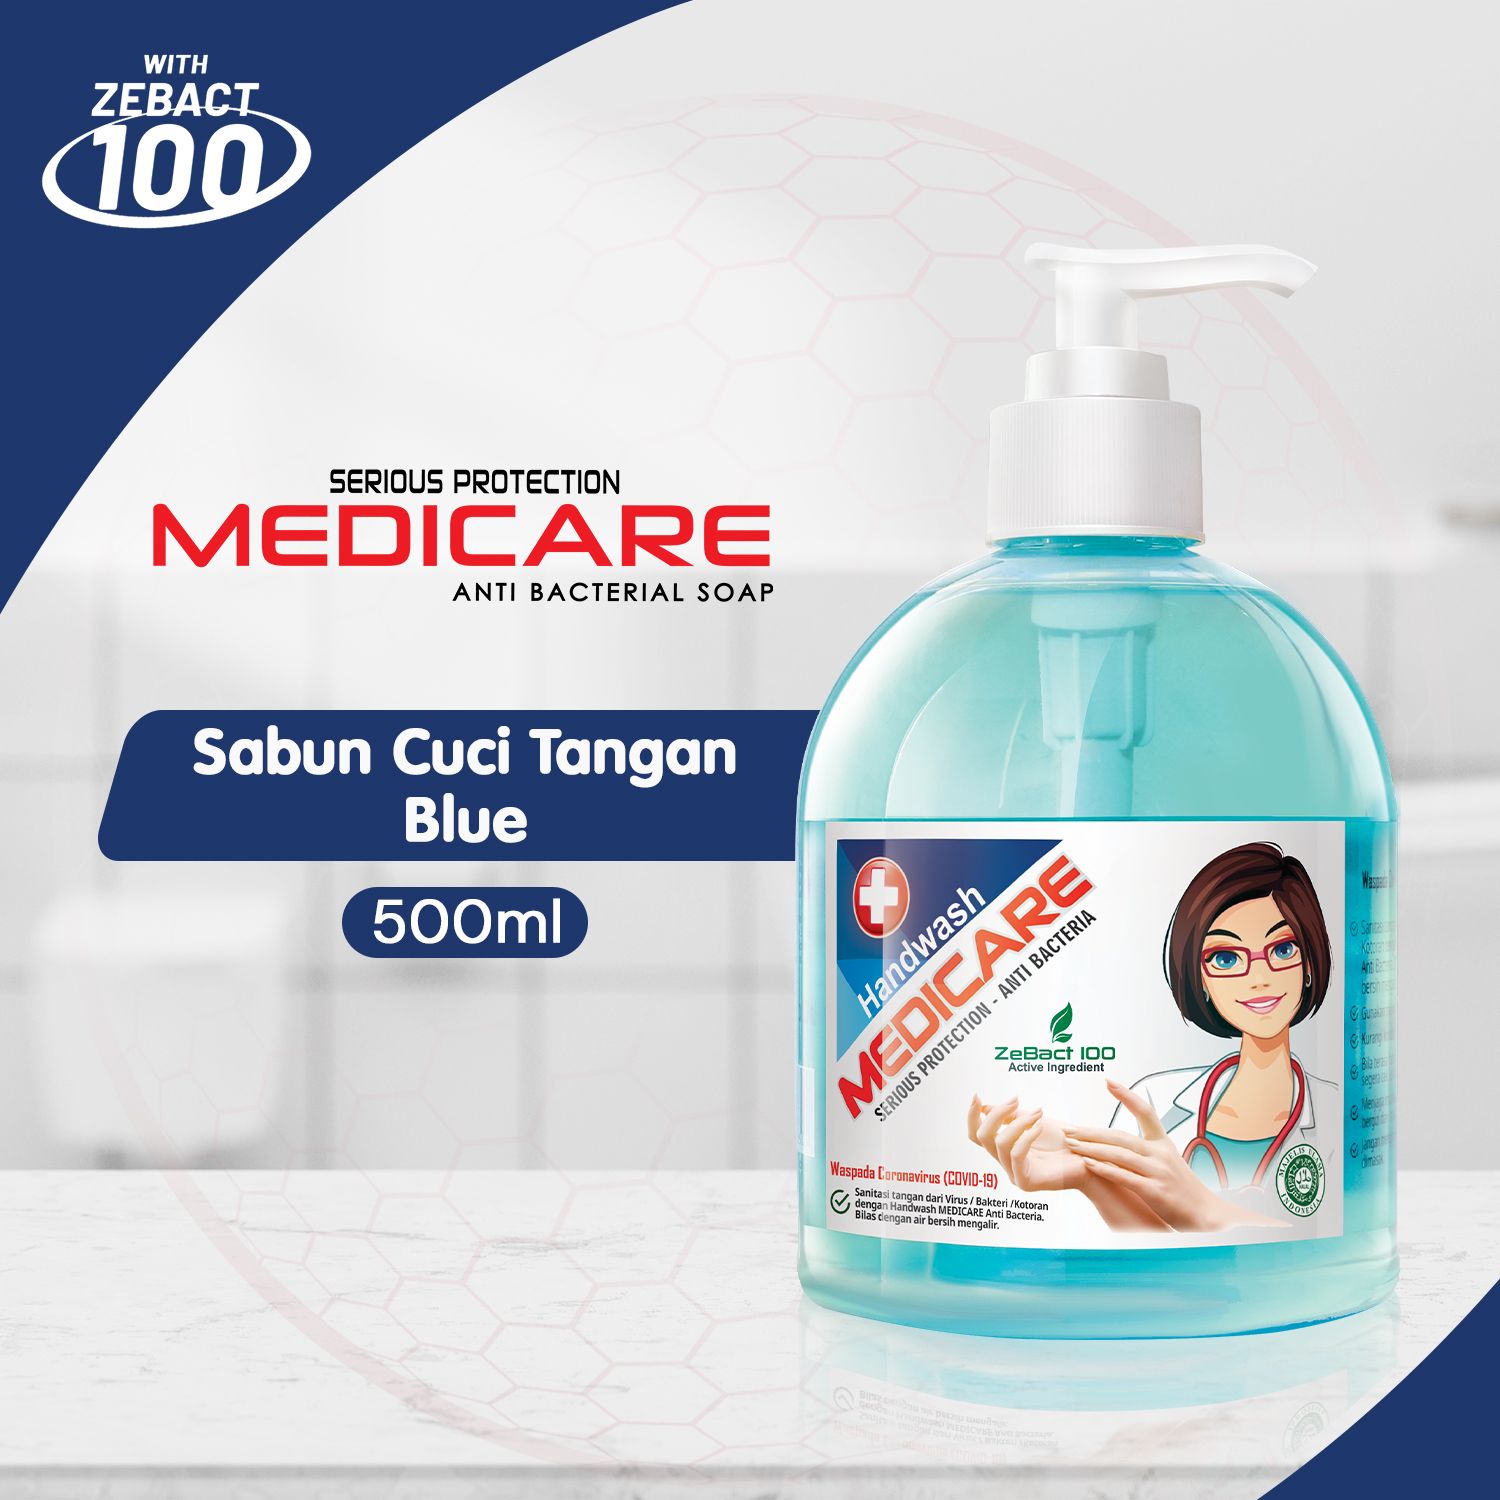 MEDICARE Sabun Cuci Tangan Antibakteri Botol Blue 500mL - 1